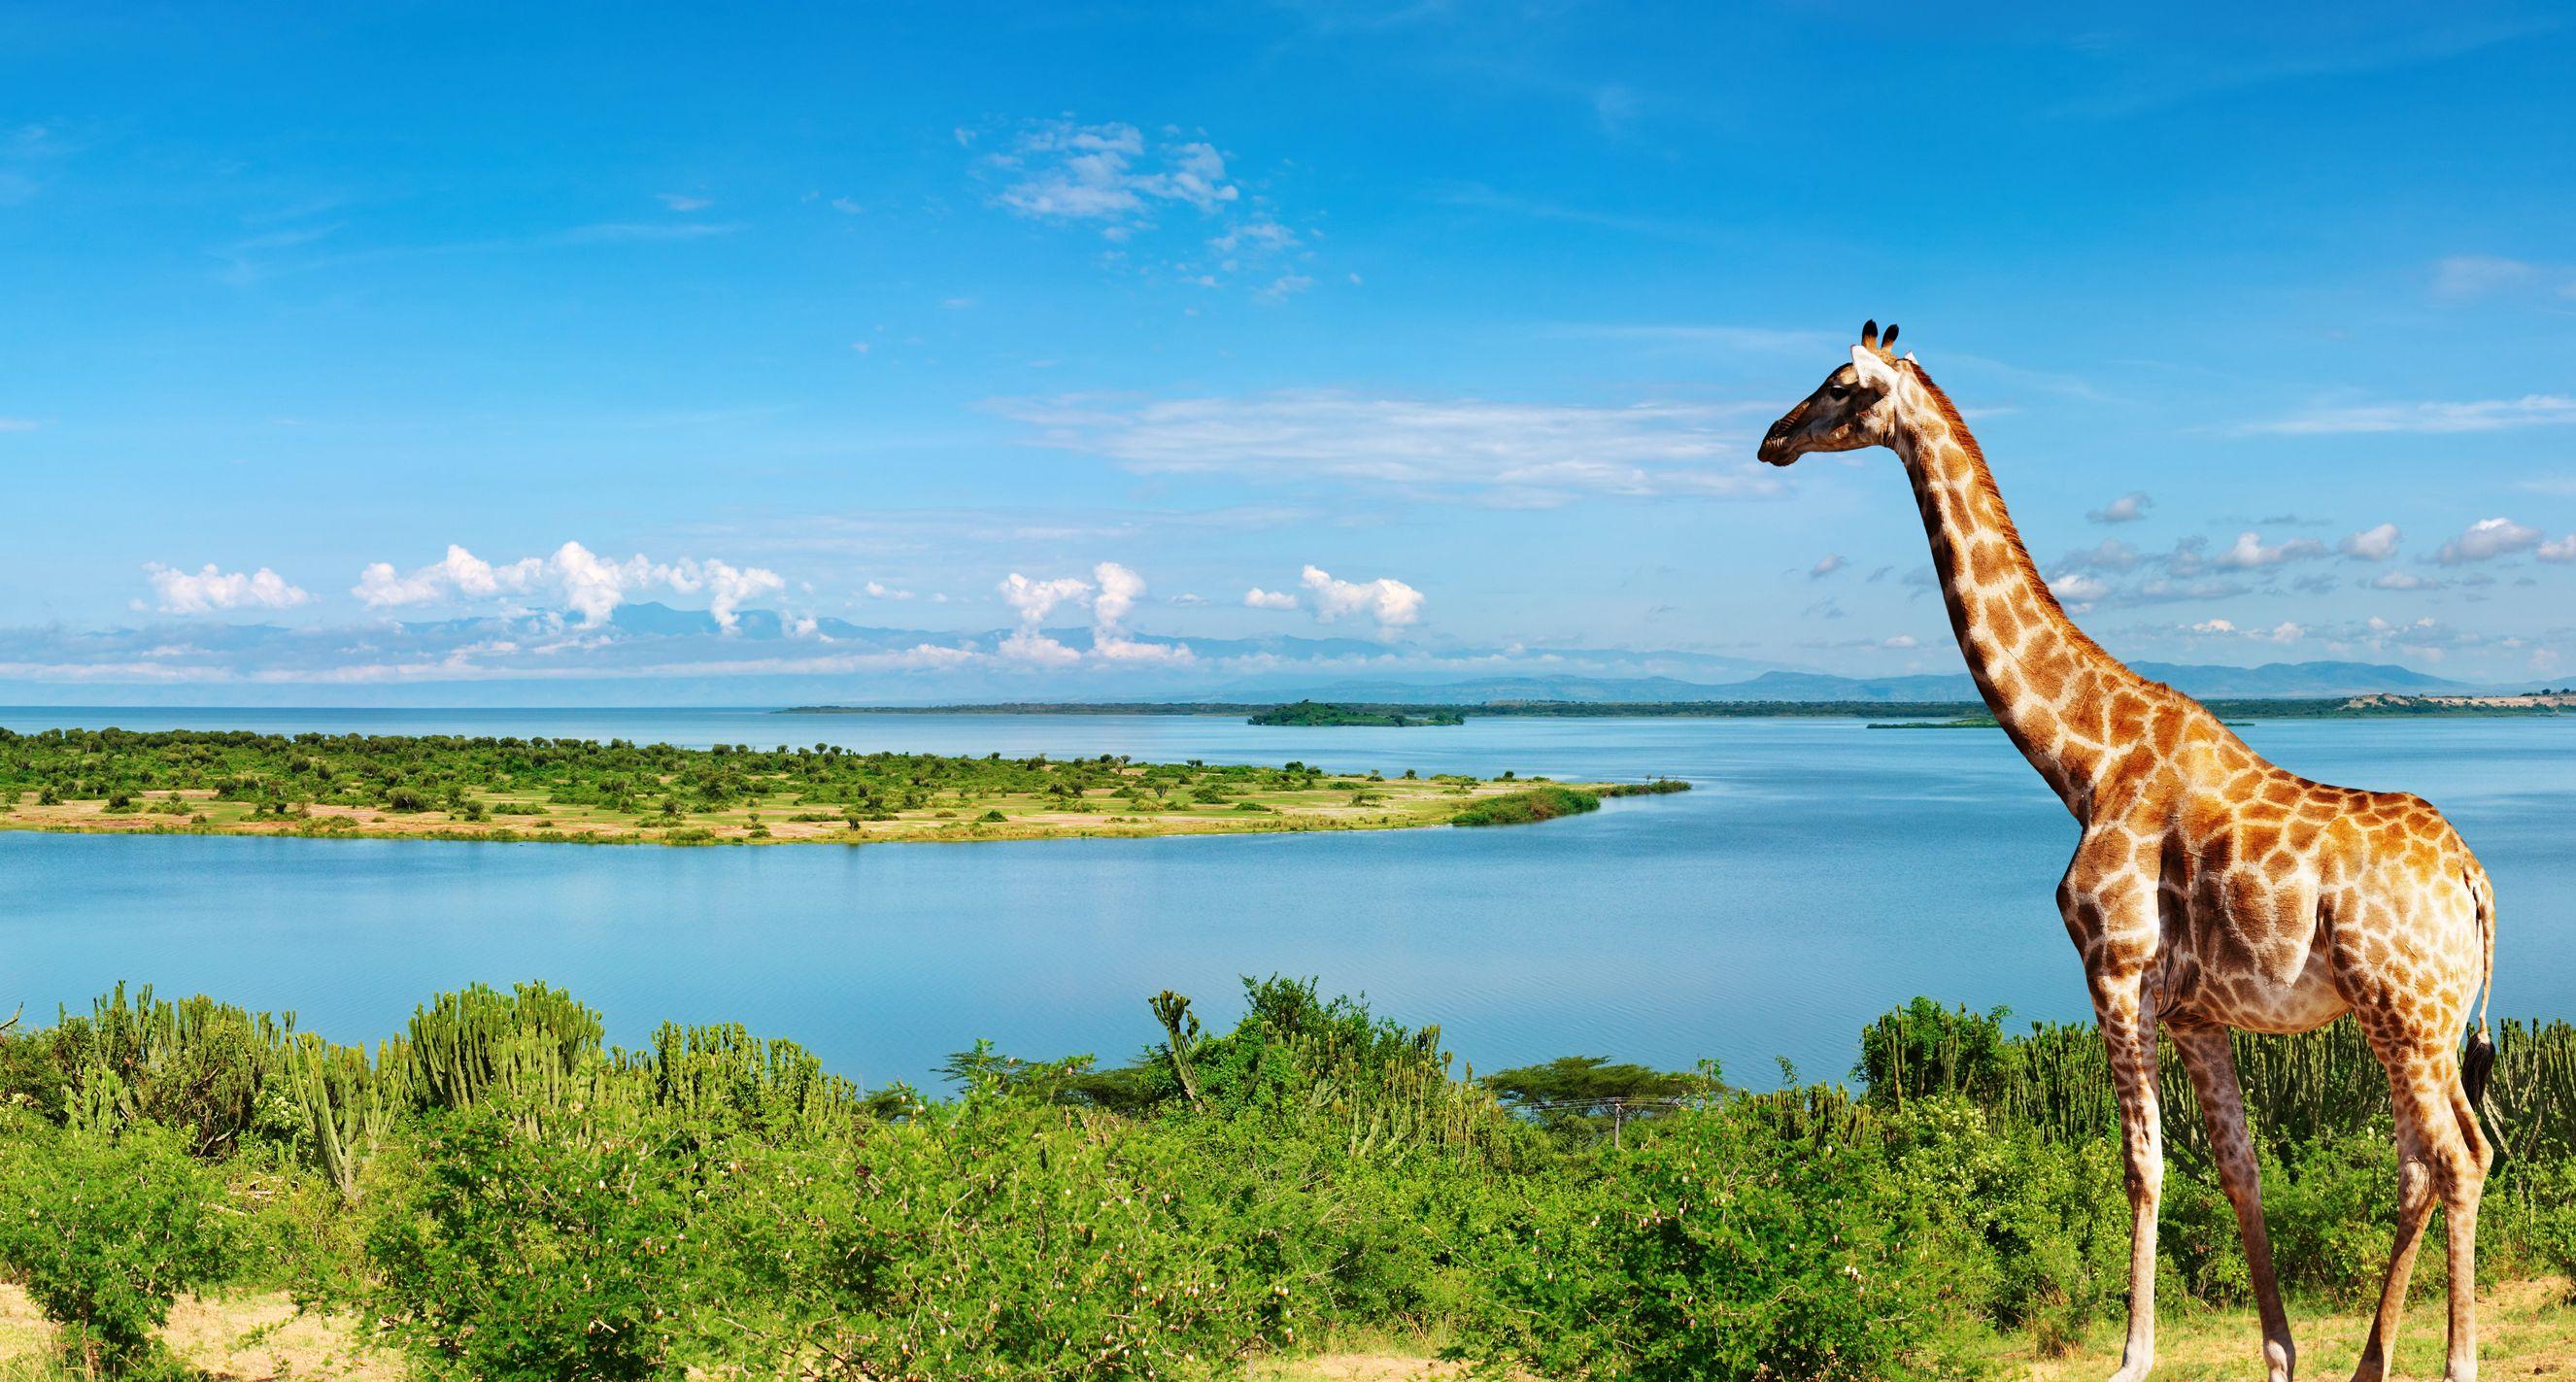 Nile River Uganda, Africa Full HD Wallpaper and Background